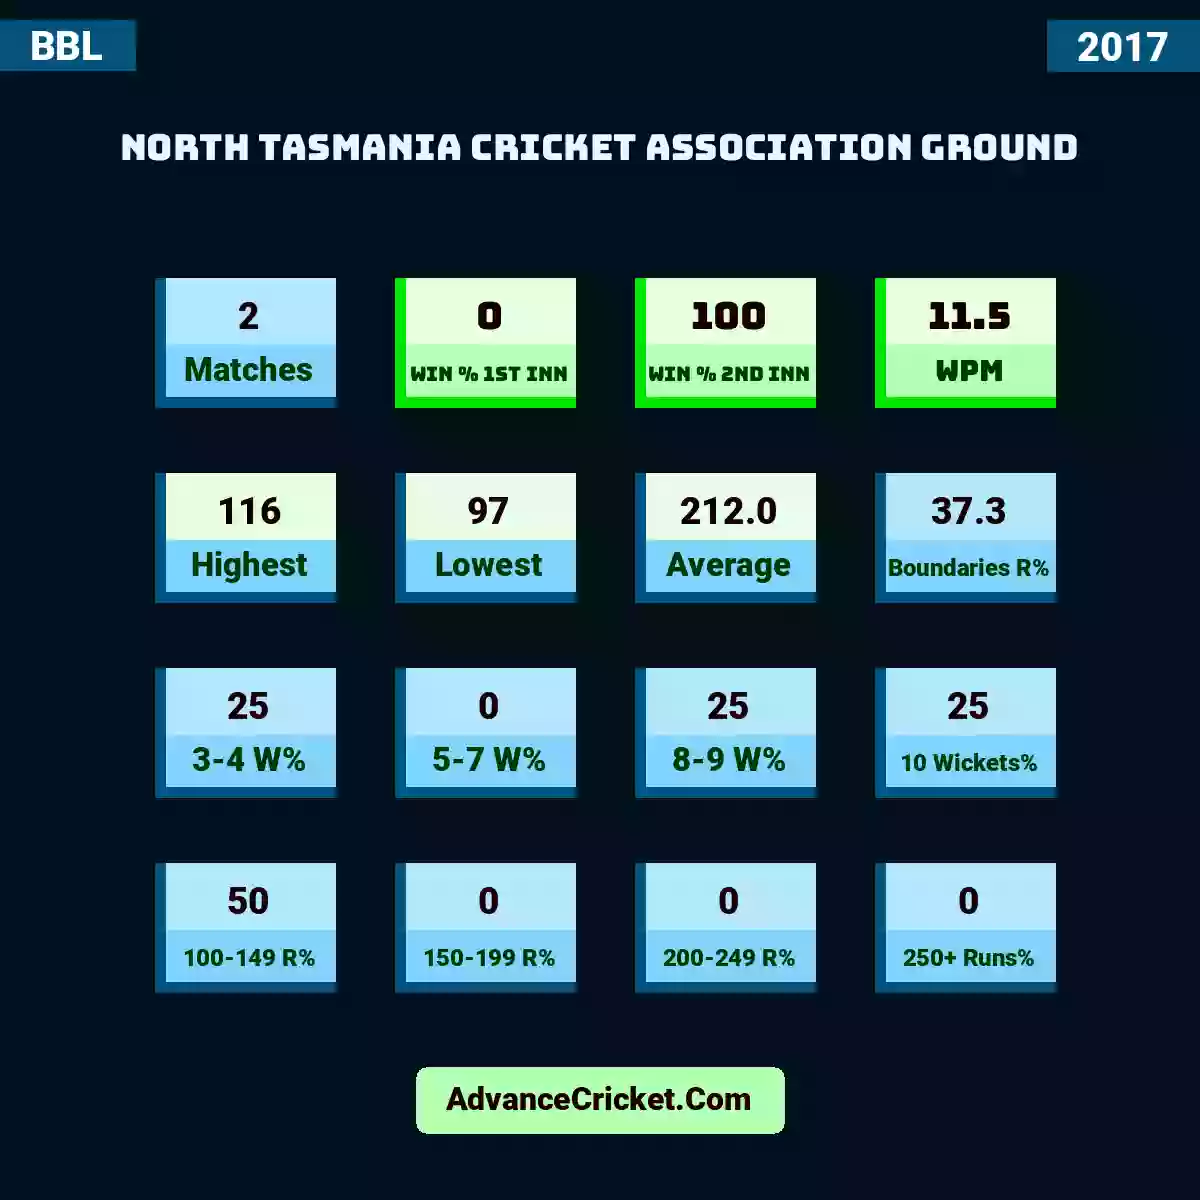 Image showing North Tasmania Cricket Association Ground with Matches: 2, Win % 1st Inn: 0, Win % 2nd Inn: 100, WPM: 11.5, Highest: 116, Lowest: 97, Average: 212.0, Boundaries R%: 37.3, 3-4 W%: 25, 5-7 W%: 0, 8-9 W%: 25, 10 Wickets%: 25, 100-149 R%: 50, 150-199 R%: 0, 200-249 R%: 0, 250+ Runs%: 0.